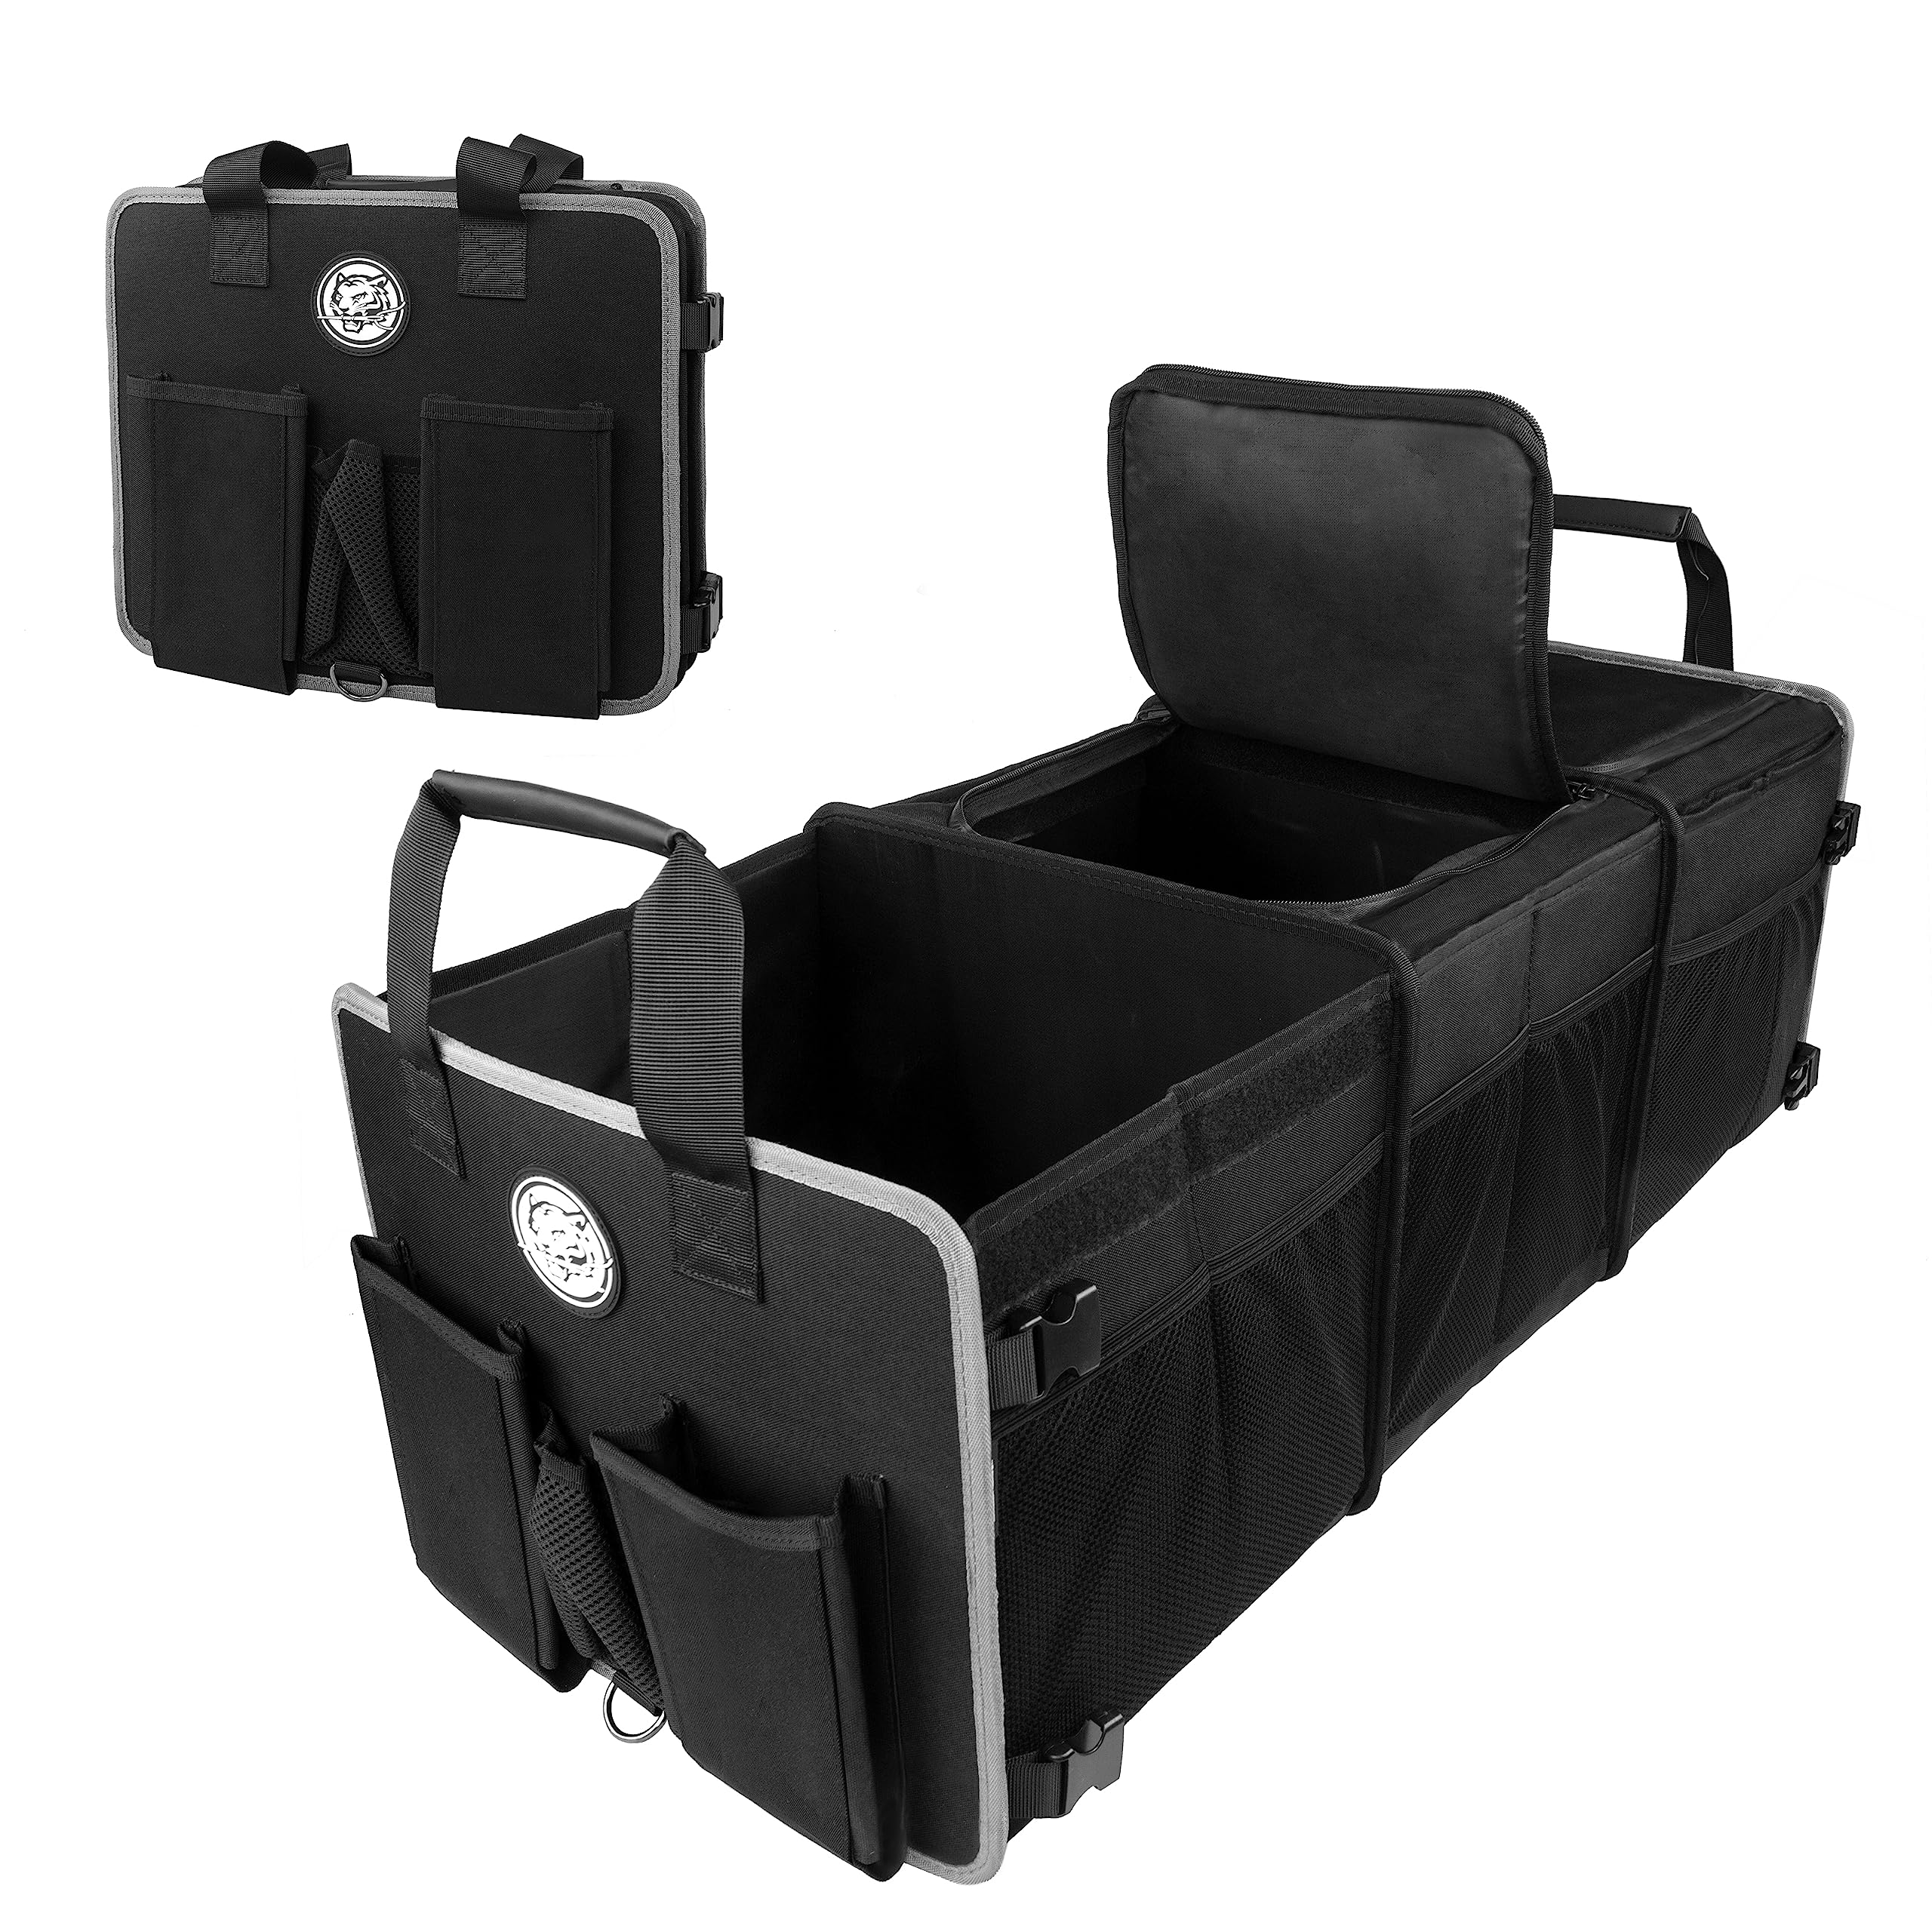 TKLoop Portable Trunk Organizer Premium 3 Compartments Collapsible Car Storage Organizer for Sedan, SUV, Truck, Minivan